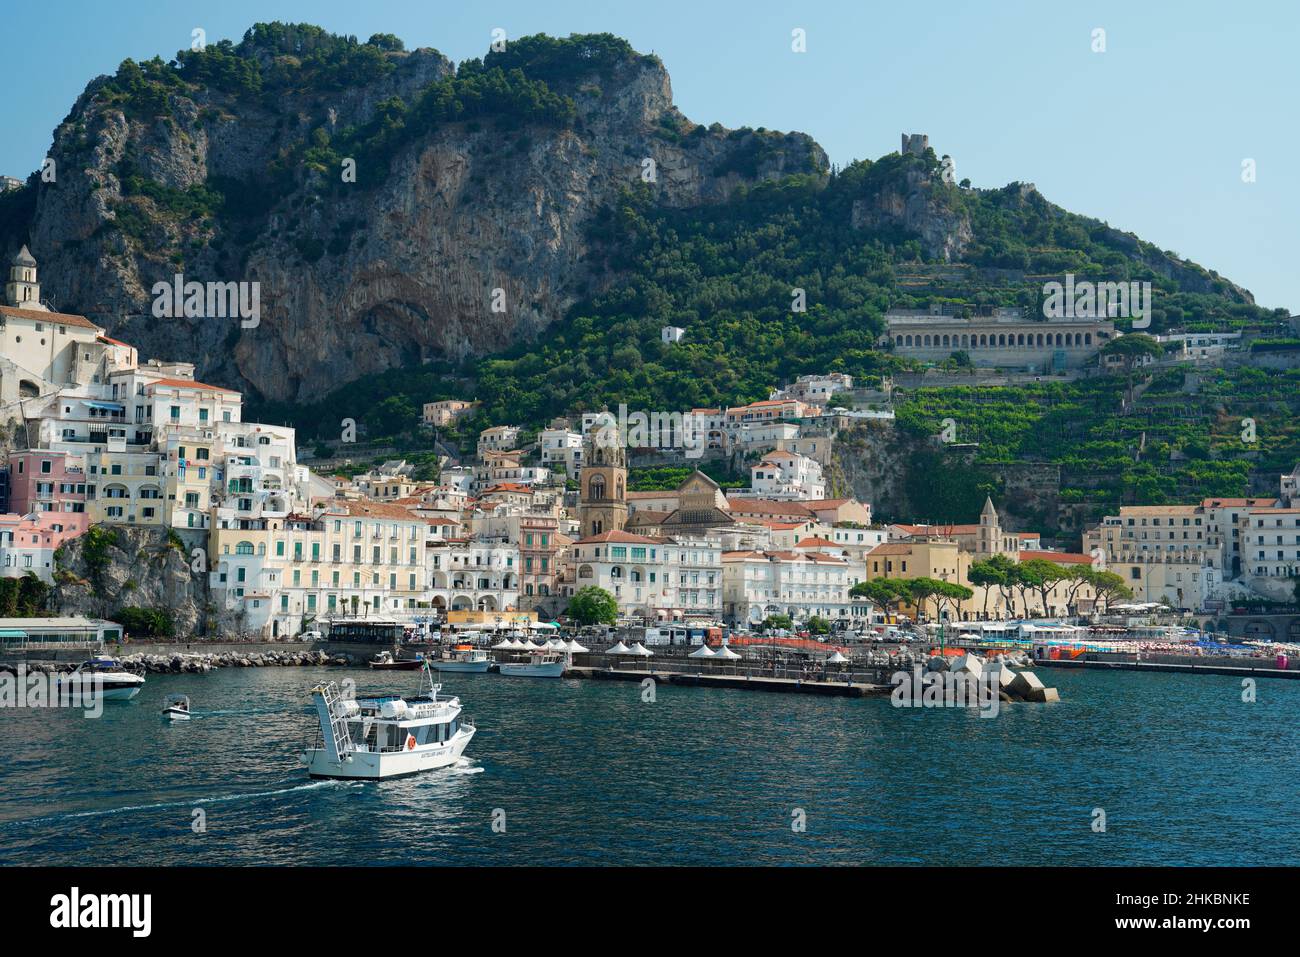 City view from the sea,Amalfi,Campania,Italy,Europe Stock Photo